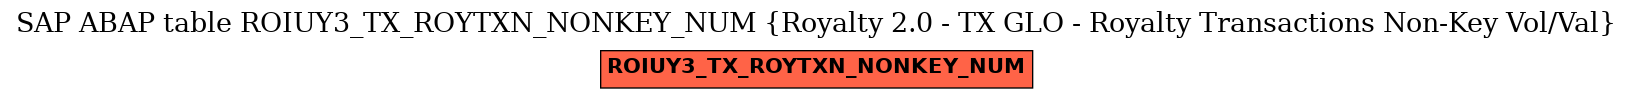 E-R Diagram for table ROIUY3_TX_ROYTXN_NONKEY_NUM (Royalty 2.0 - TX GLO - Royalty Transactions Non-Key Vol/Val)